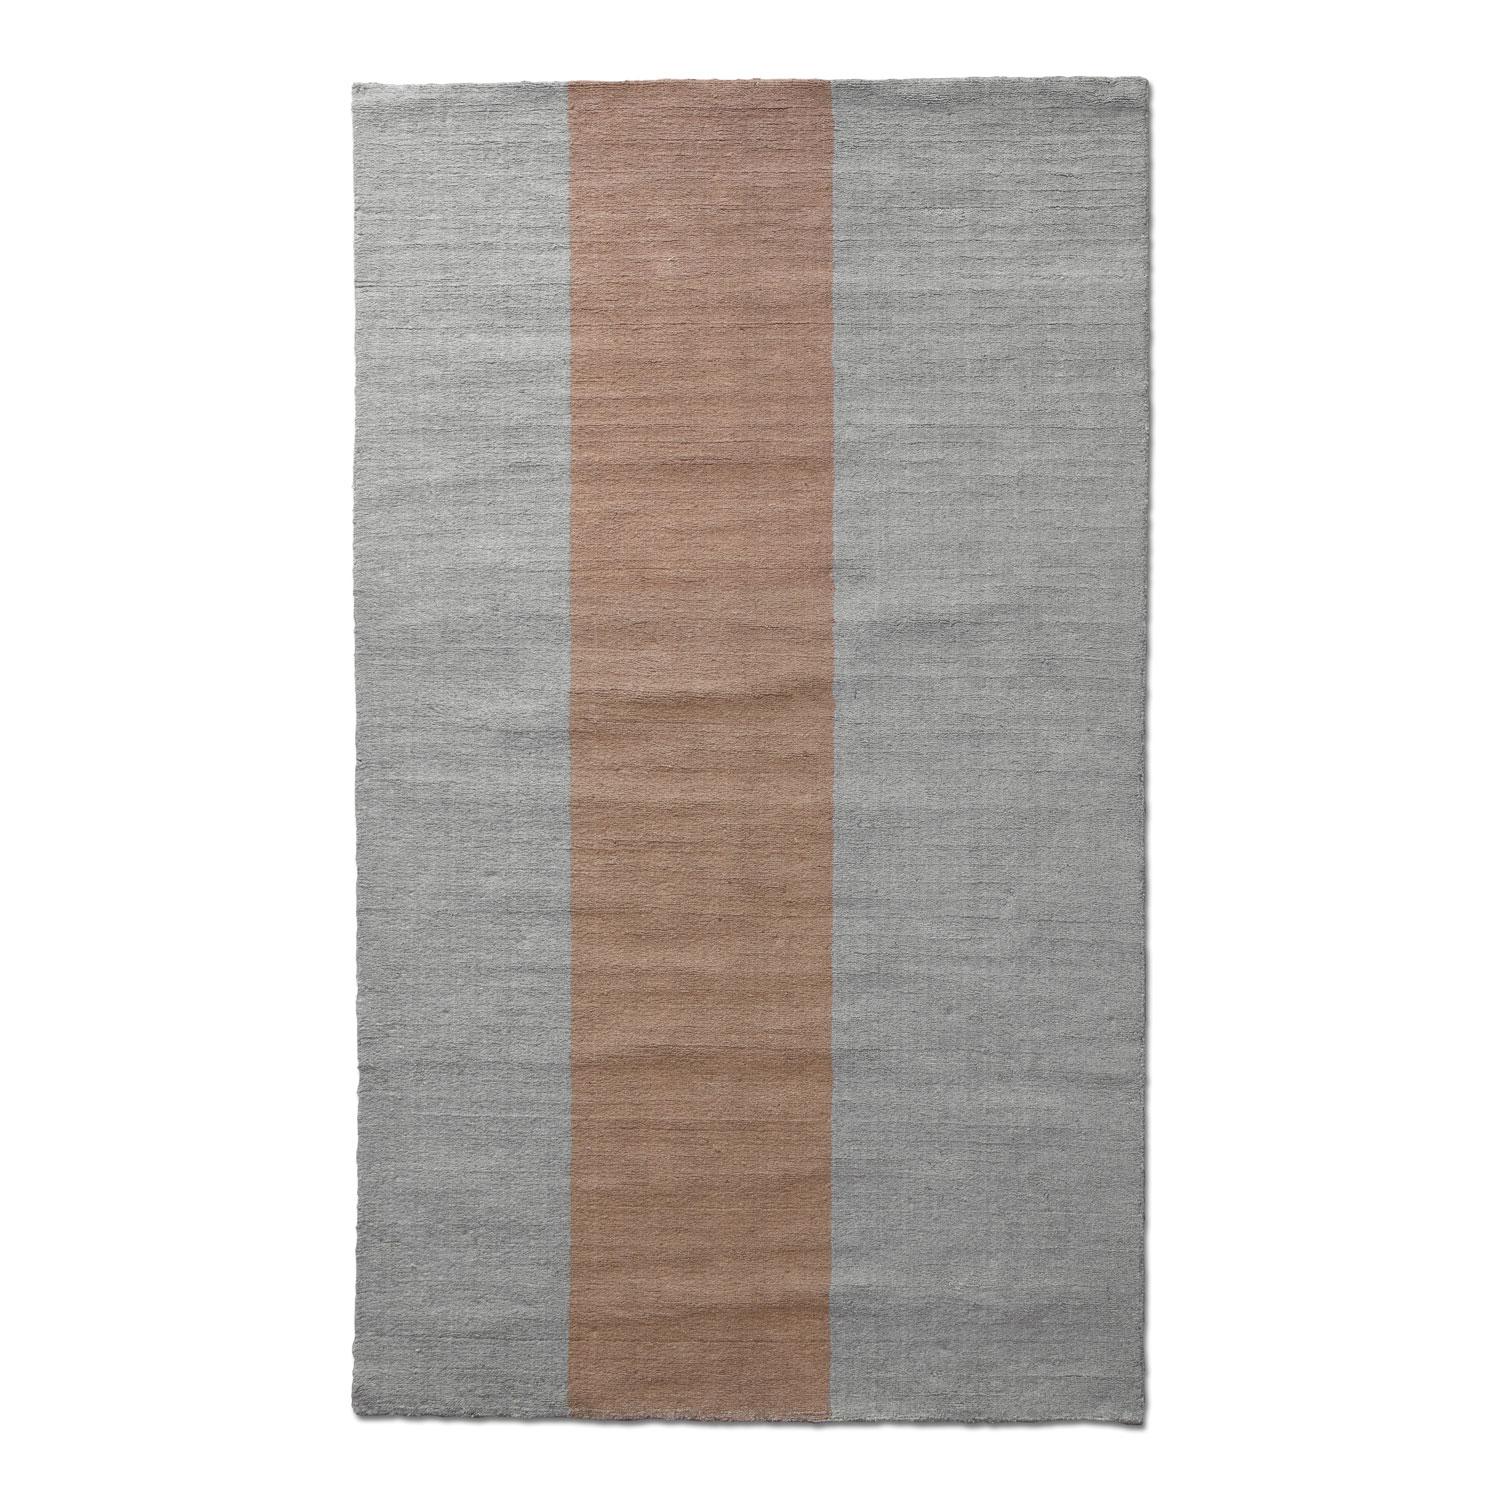 21st Cent Neutral Tones Natural Linen Rug by Deanna Comellini 150x250cm For Sale